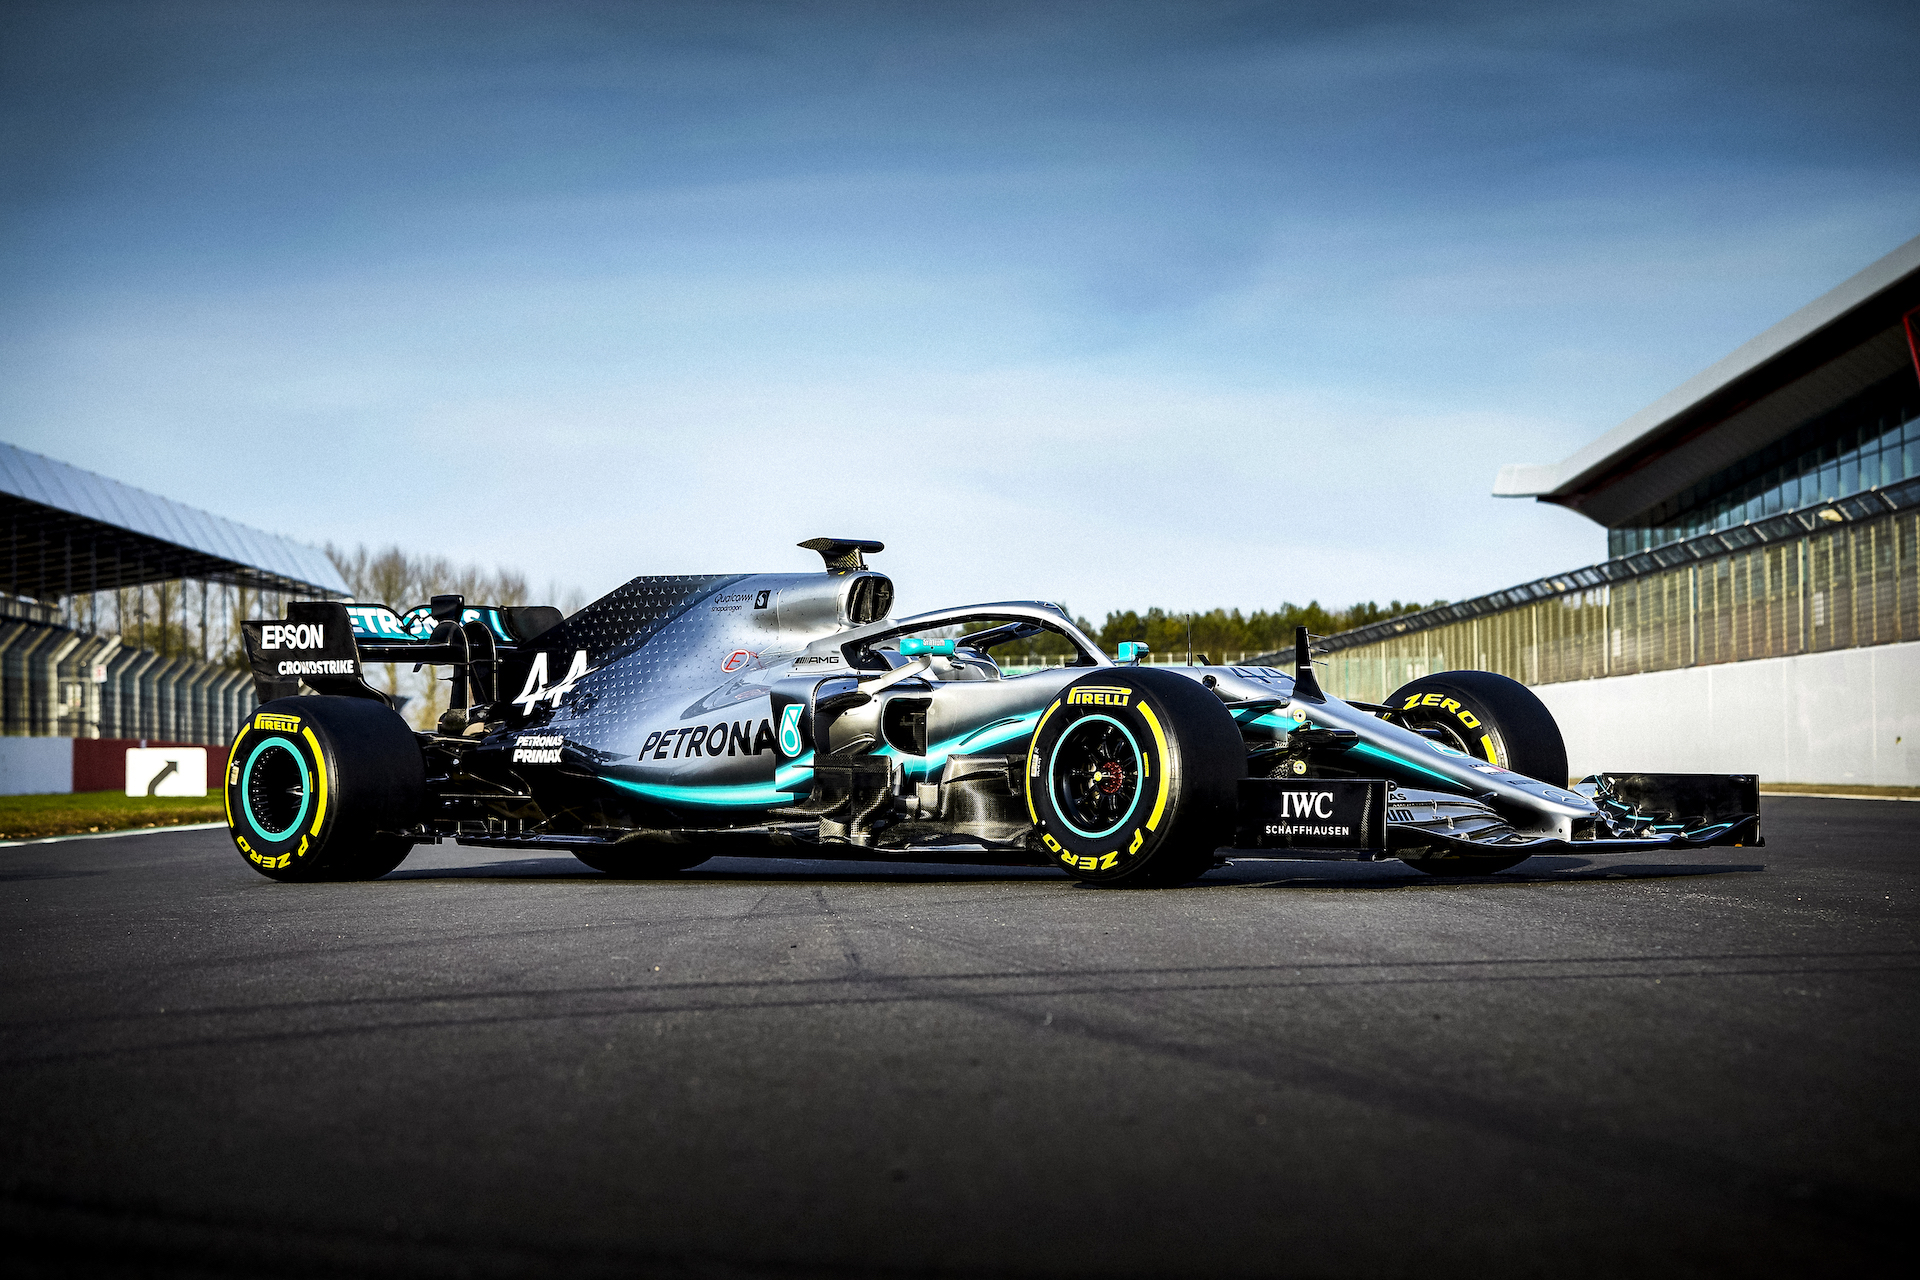 2019 MercedesAMG F1 car revealed, laps Silverstone